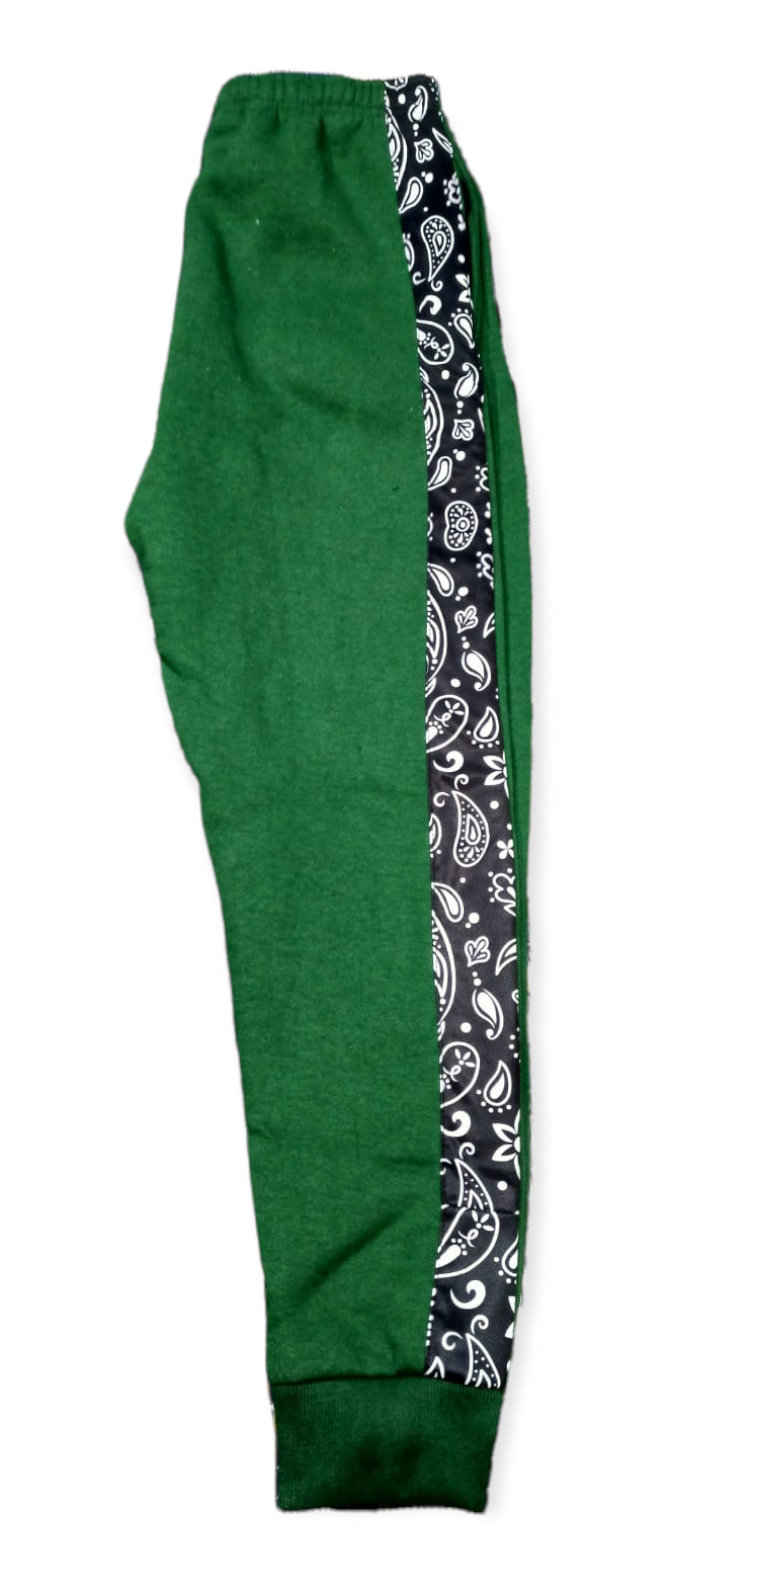 Embroided track suit Green/White/Black Bandana